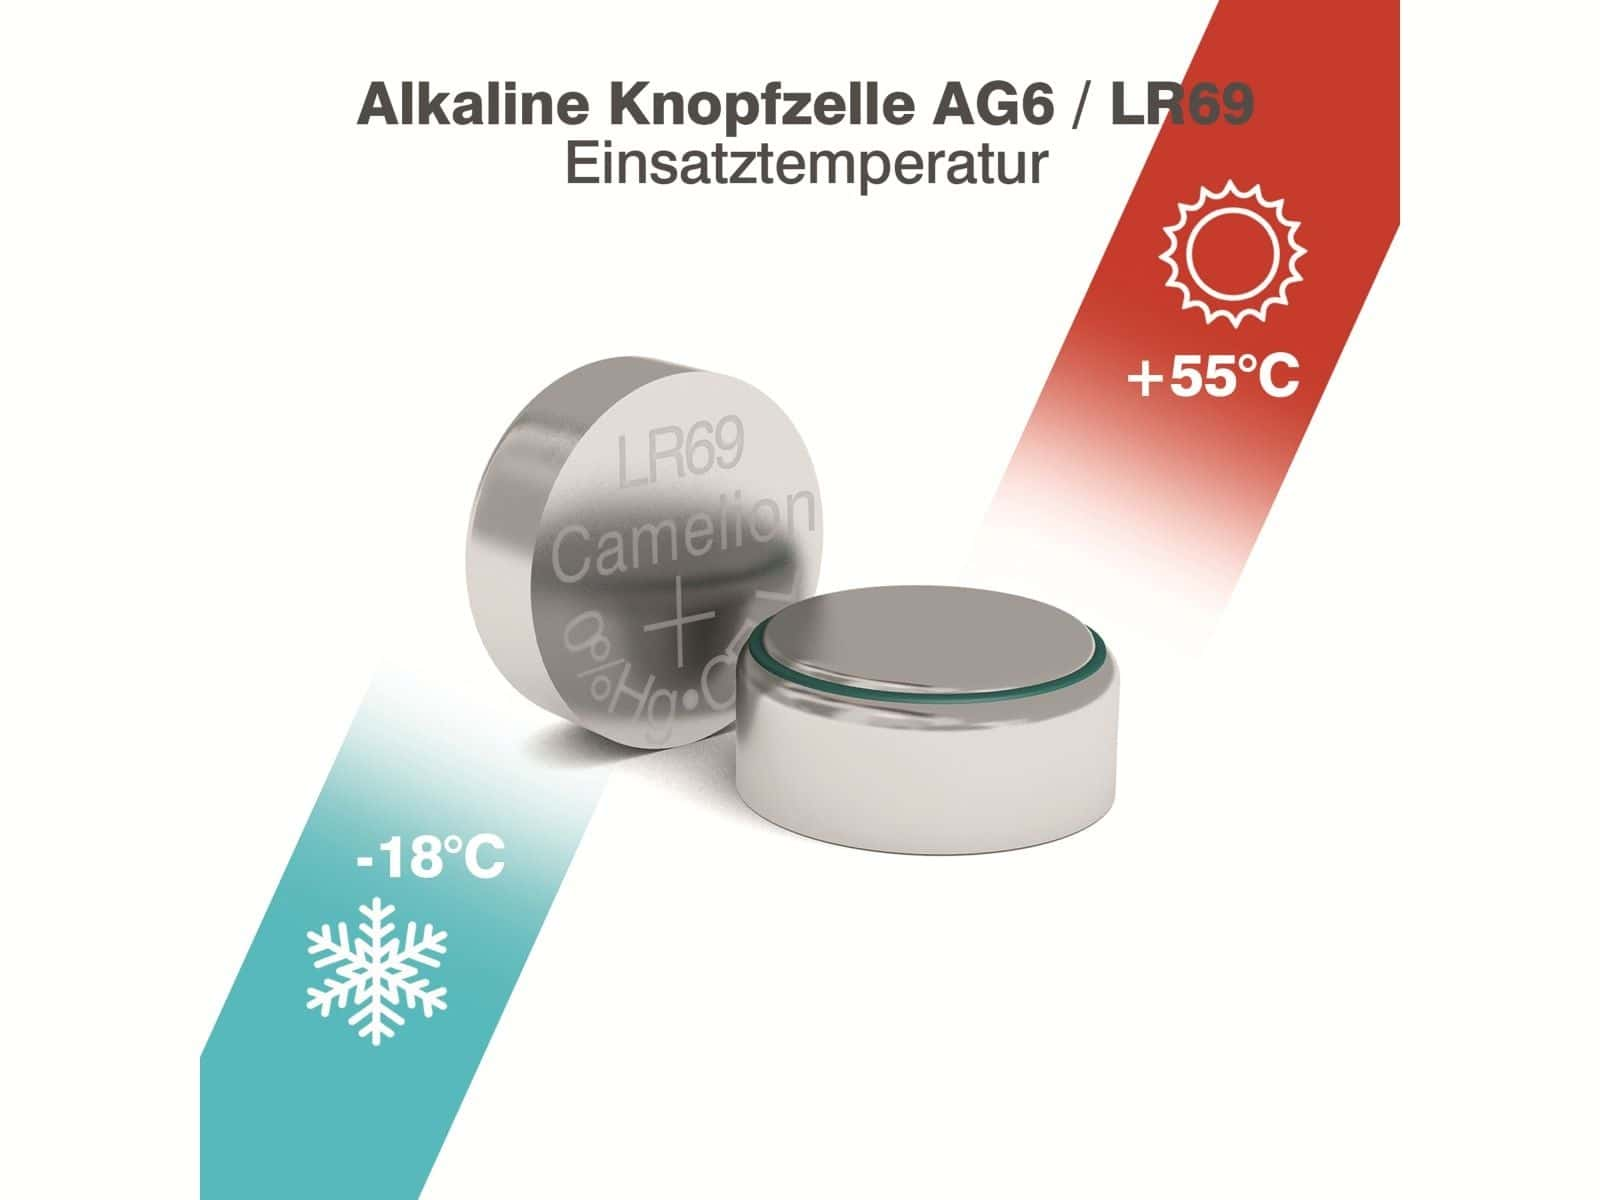 Alkaline St. Knopfzelle AG6, 10 Knopfzelle CAMELION